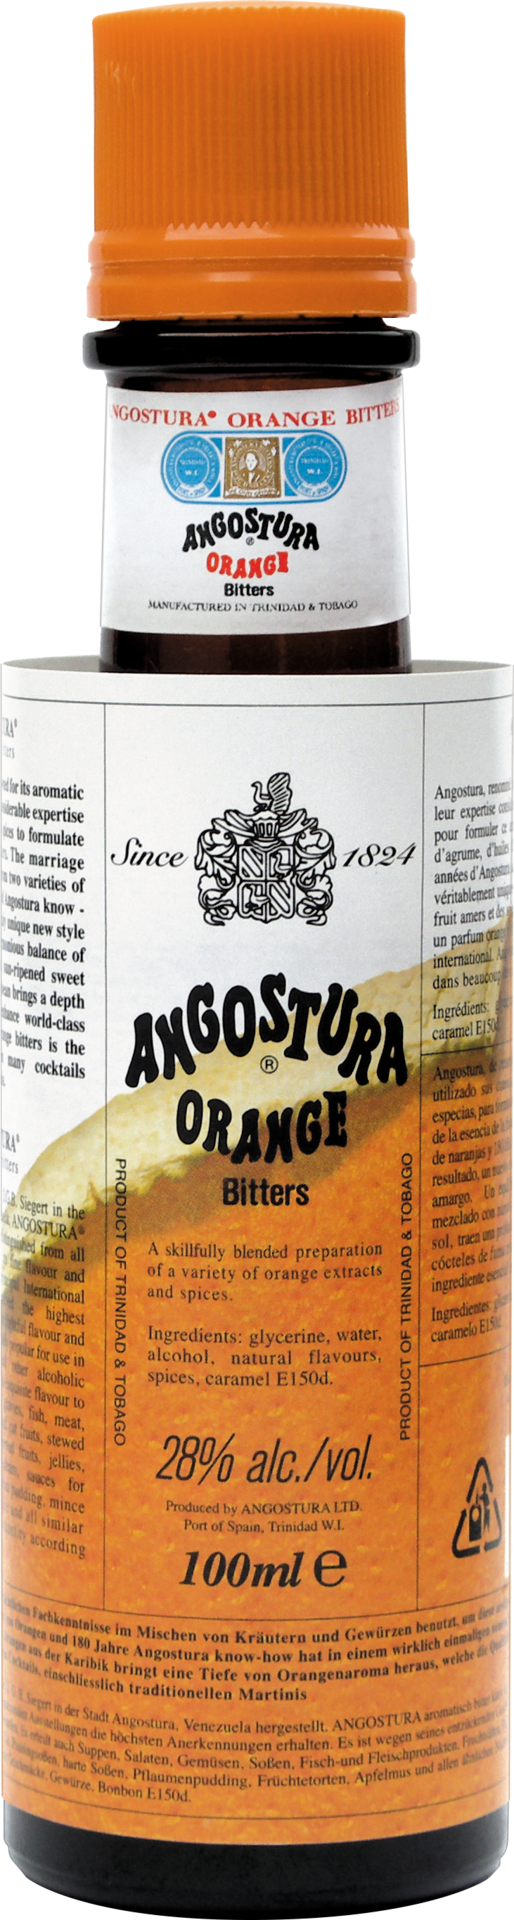 Angostura Orange Bitters aus Trinidad